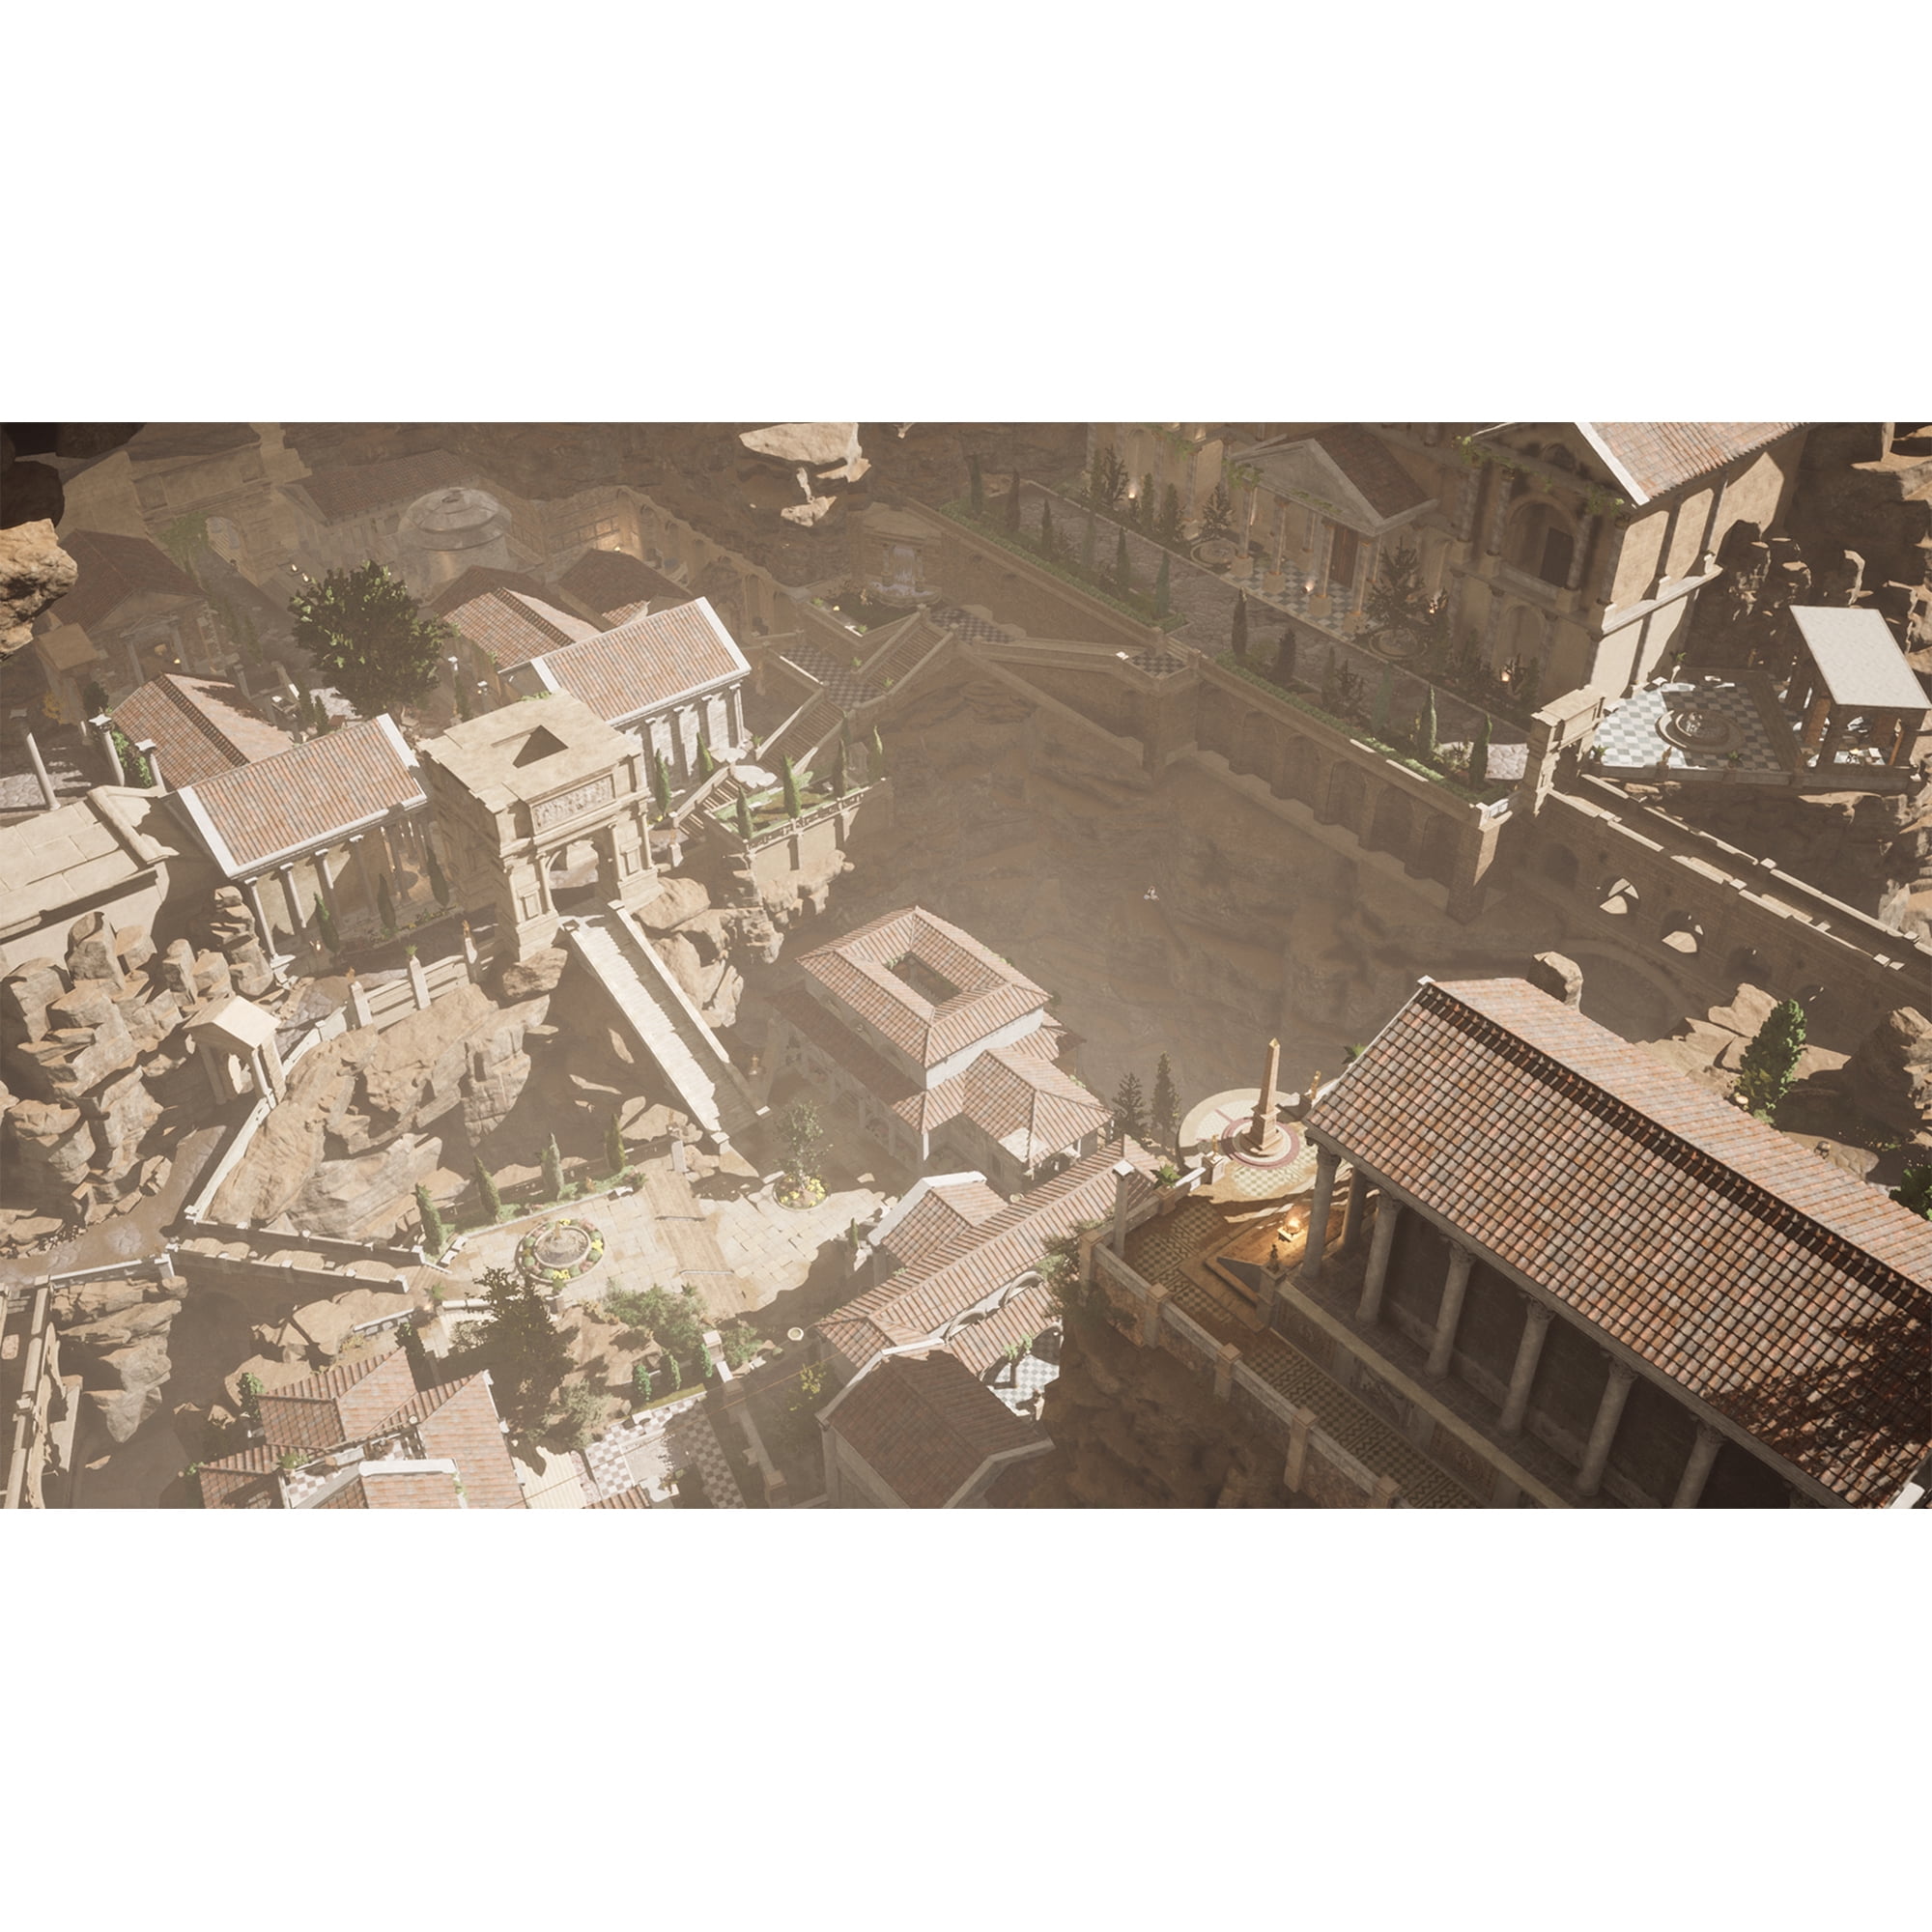 The Forgotten City (Xbox Series X / Xbox One)